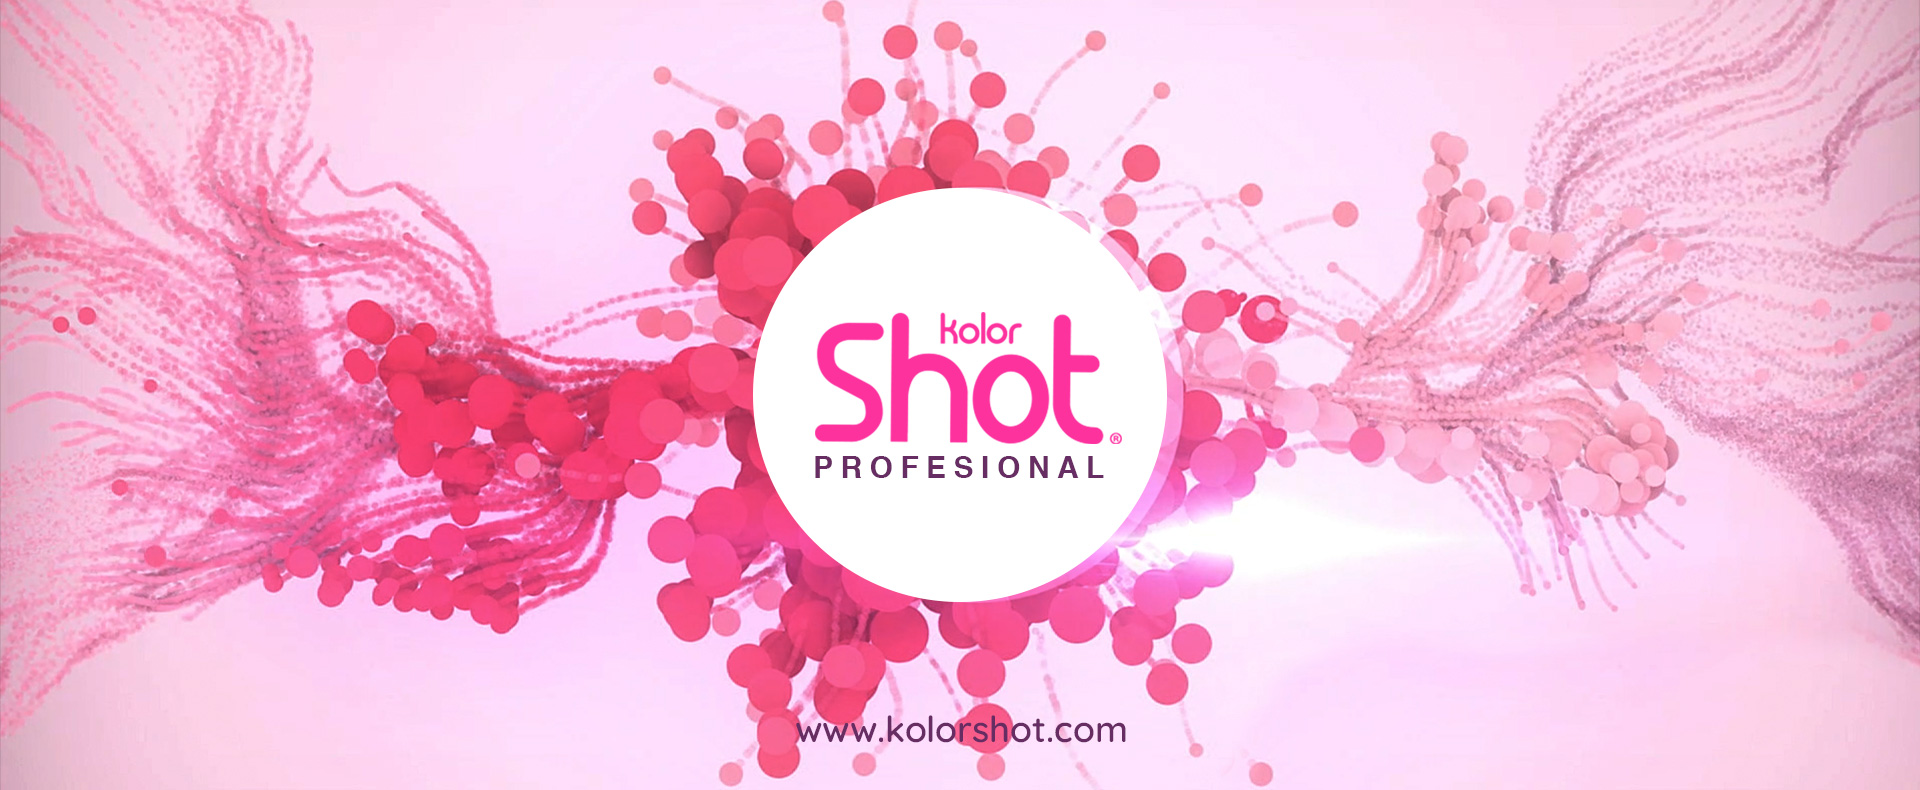 Kolor Shot Profesional